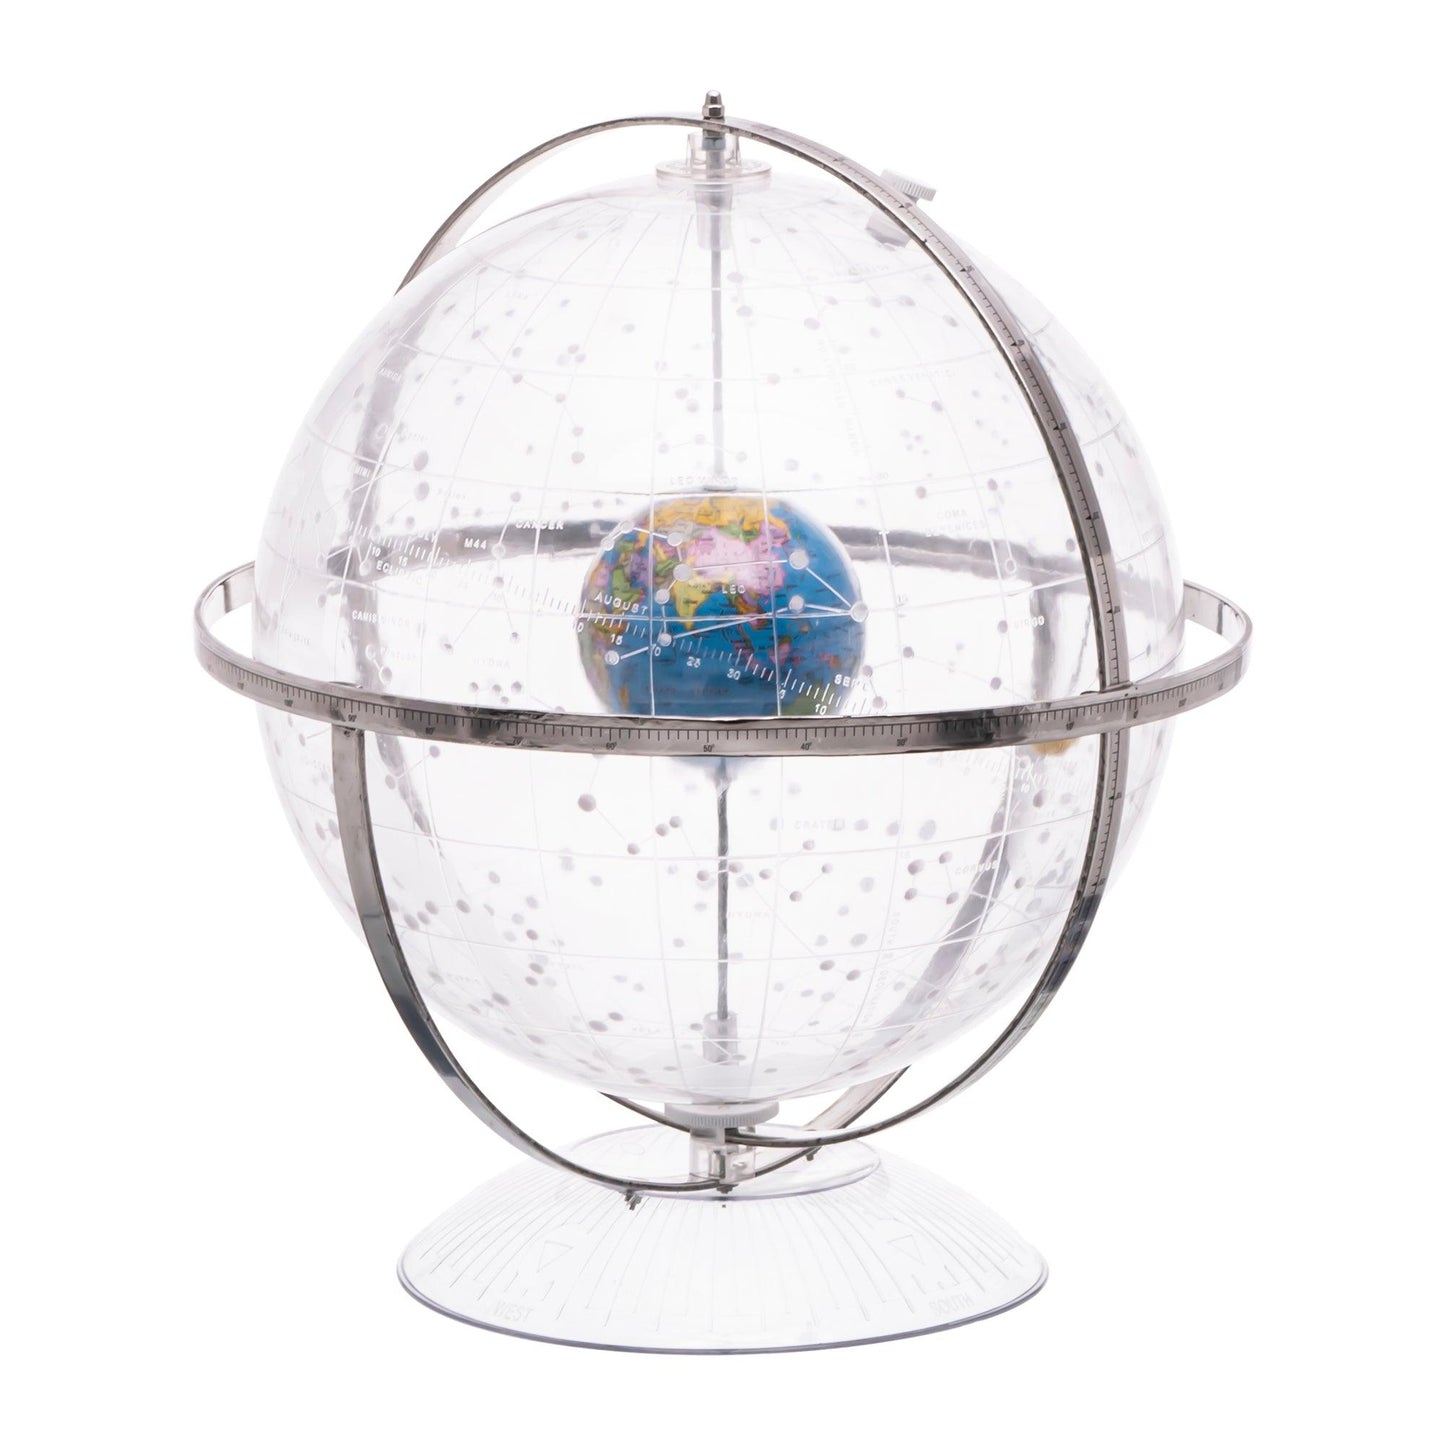 Celestial Globe with Meridian Ring - Loomini